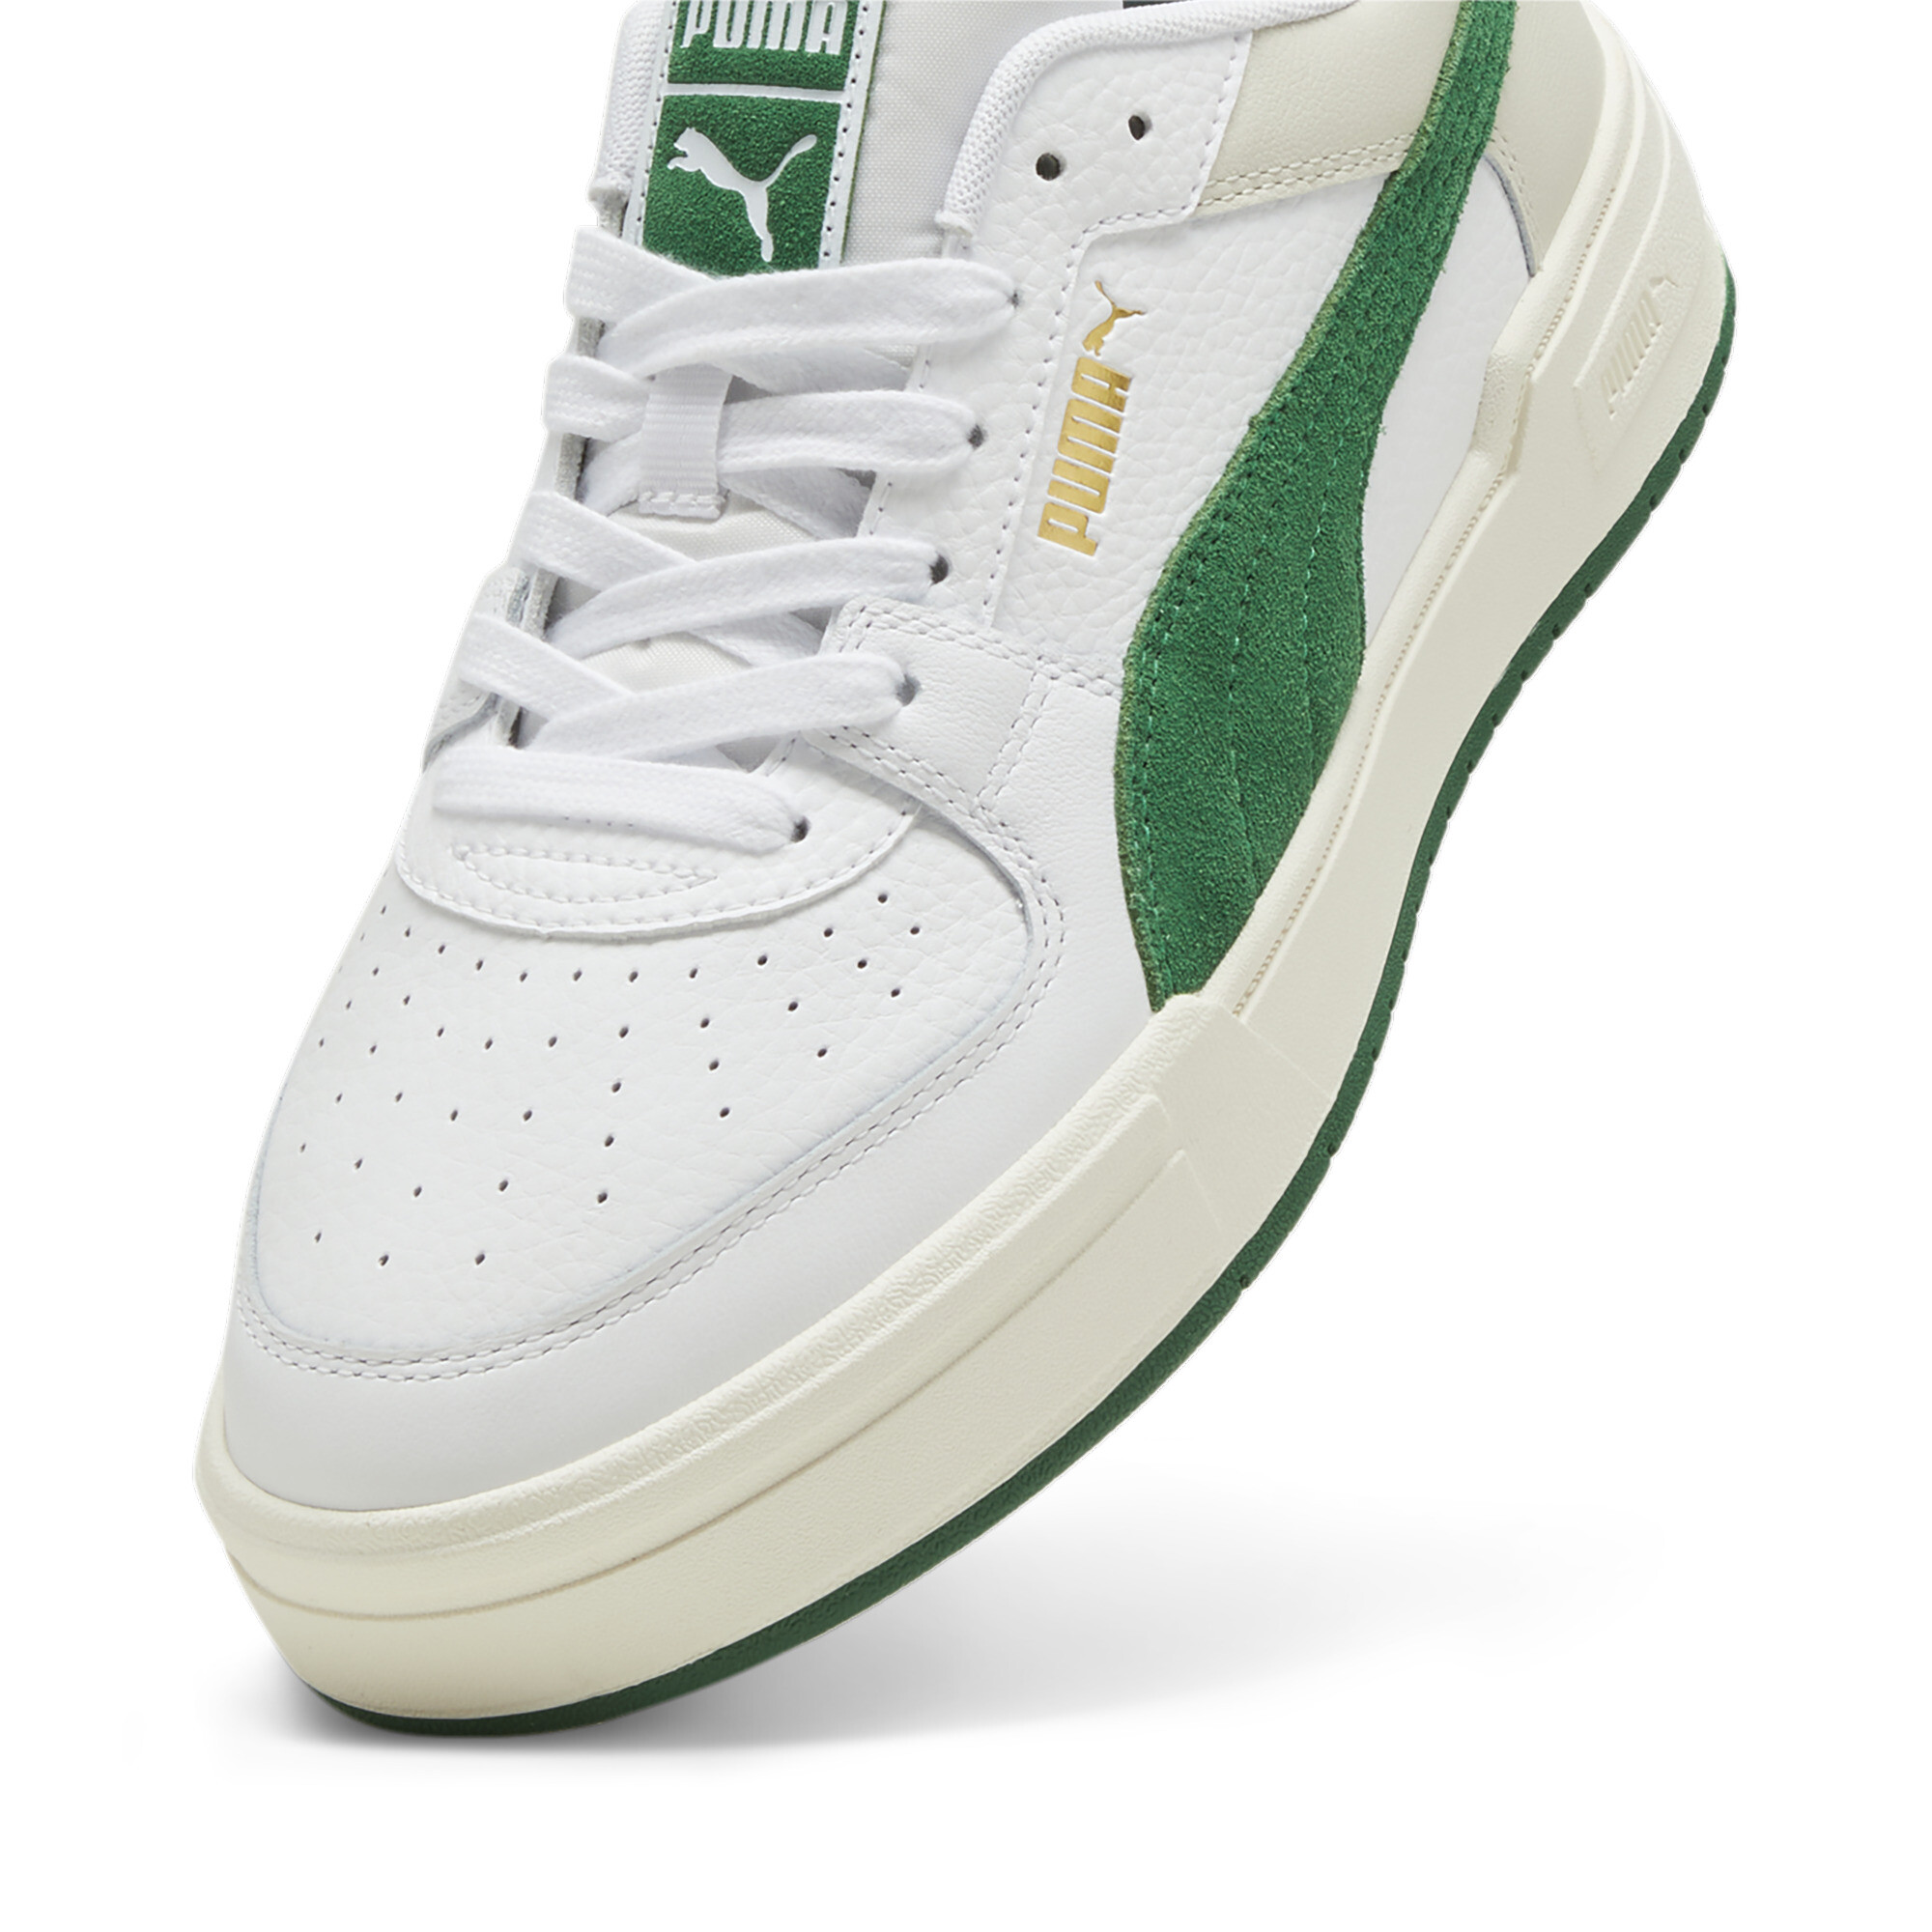 Men's PUMA CA Pro Suede FS Sneakers In White, Size EU 44.5